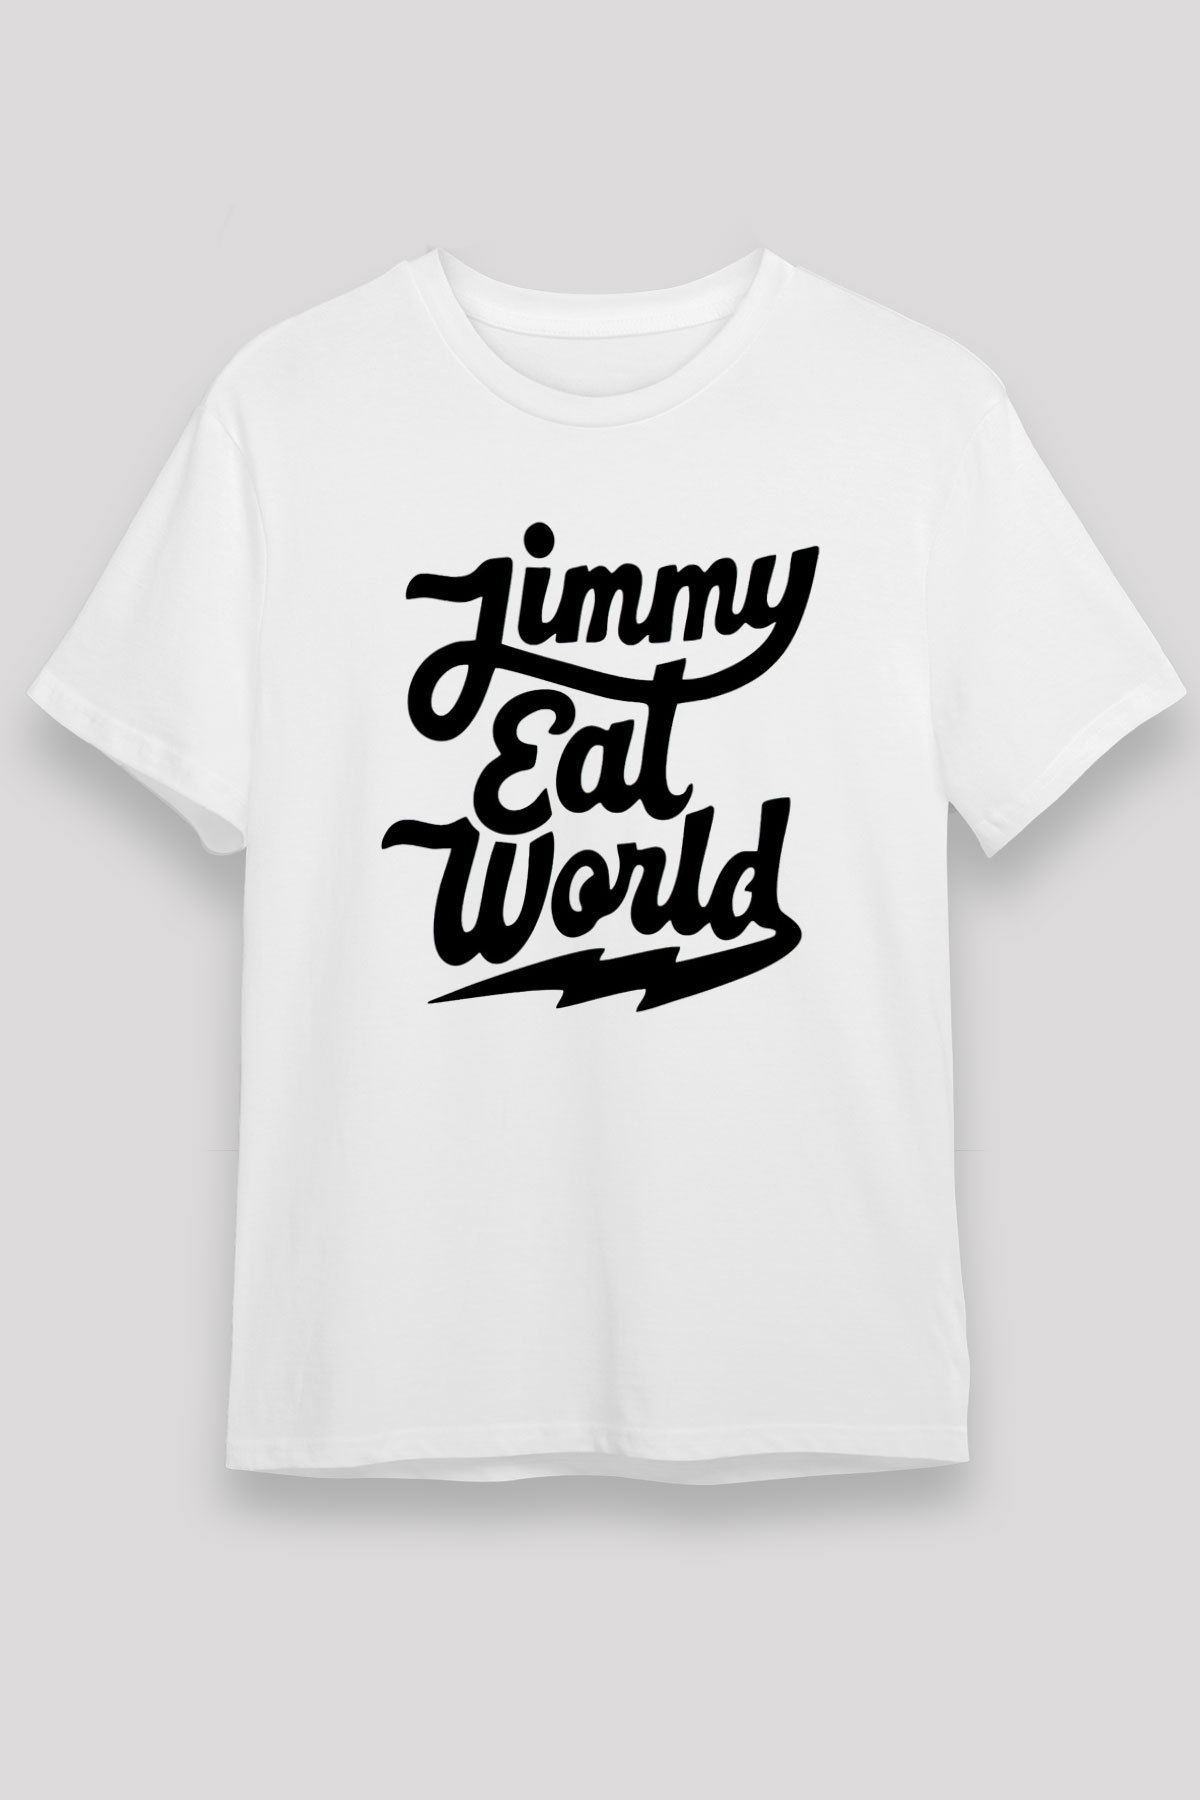 Jimmy Eat World T shirt,Music Band,Unisex Tshirt 01